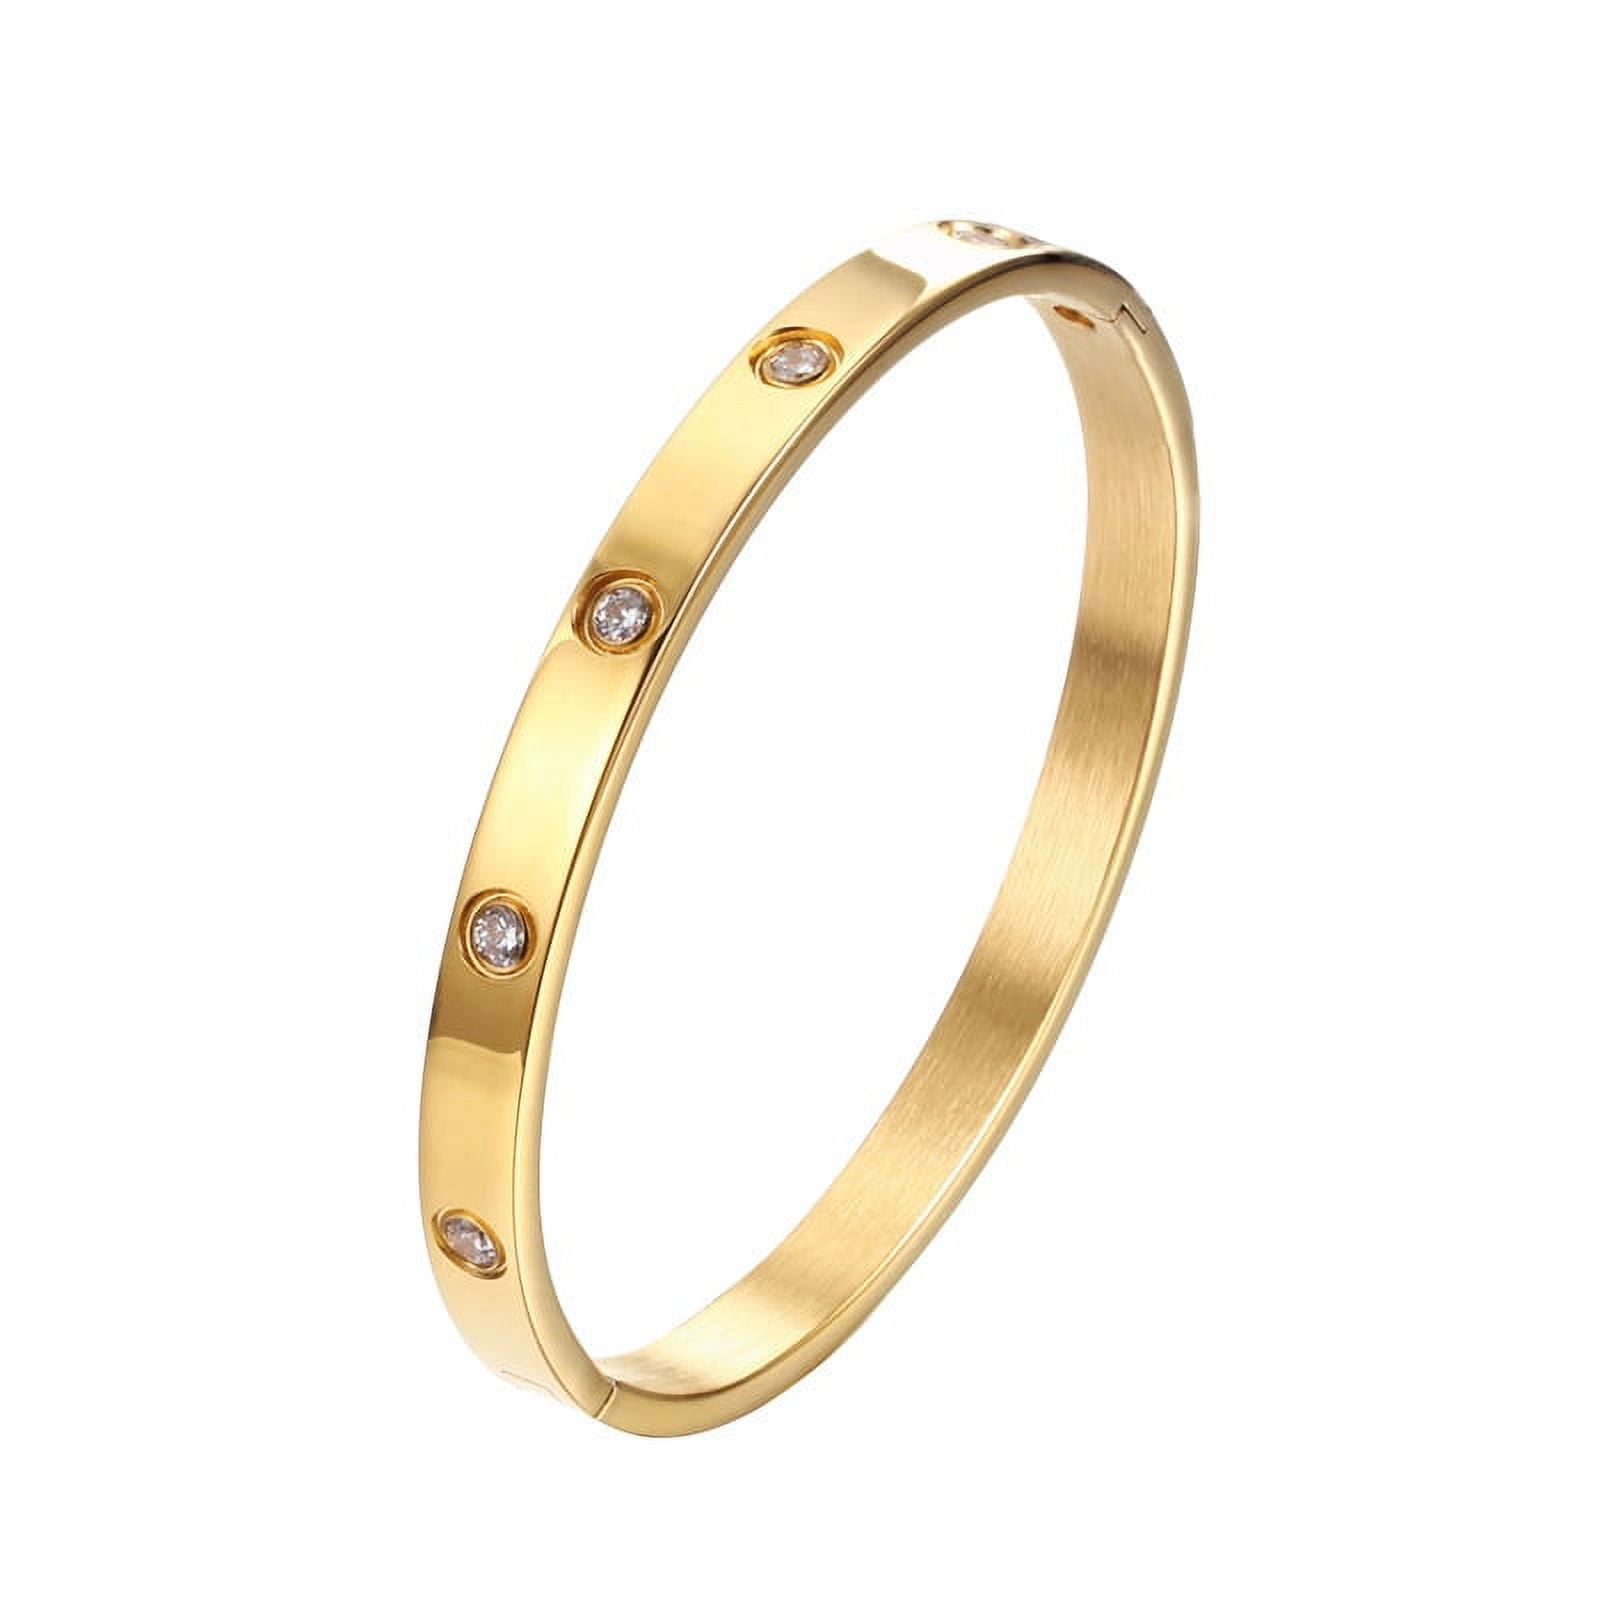 Fancy Cartier Design Gold Bracelet